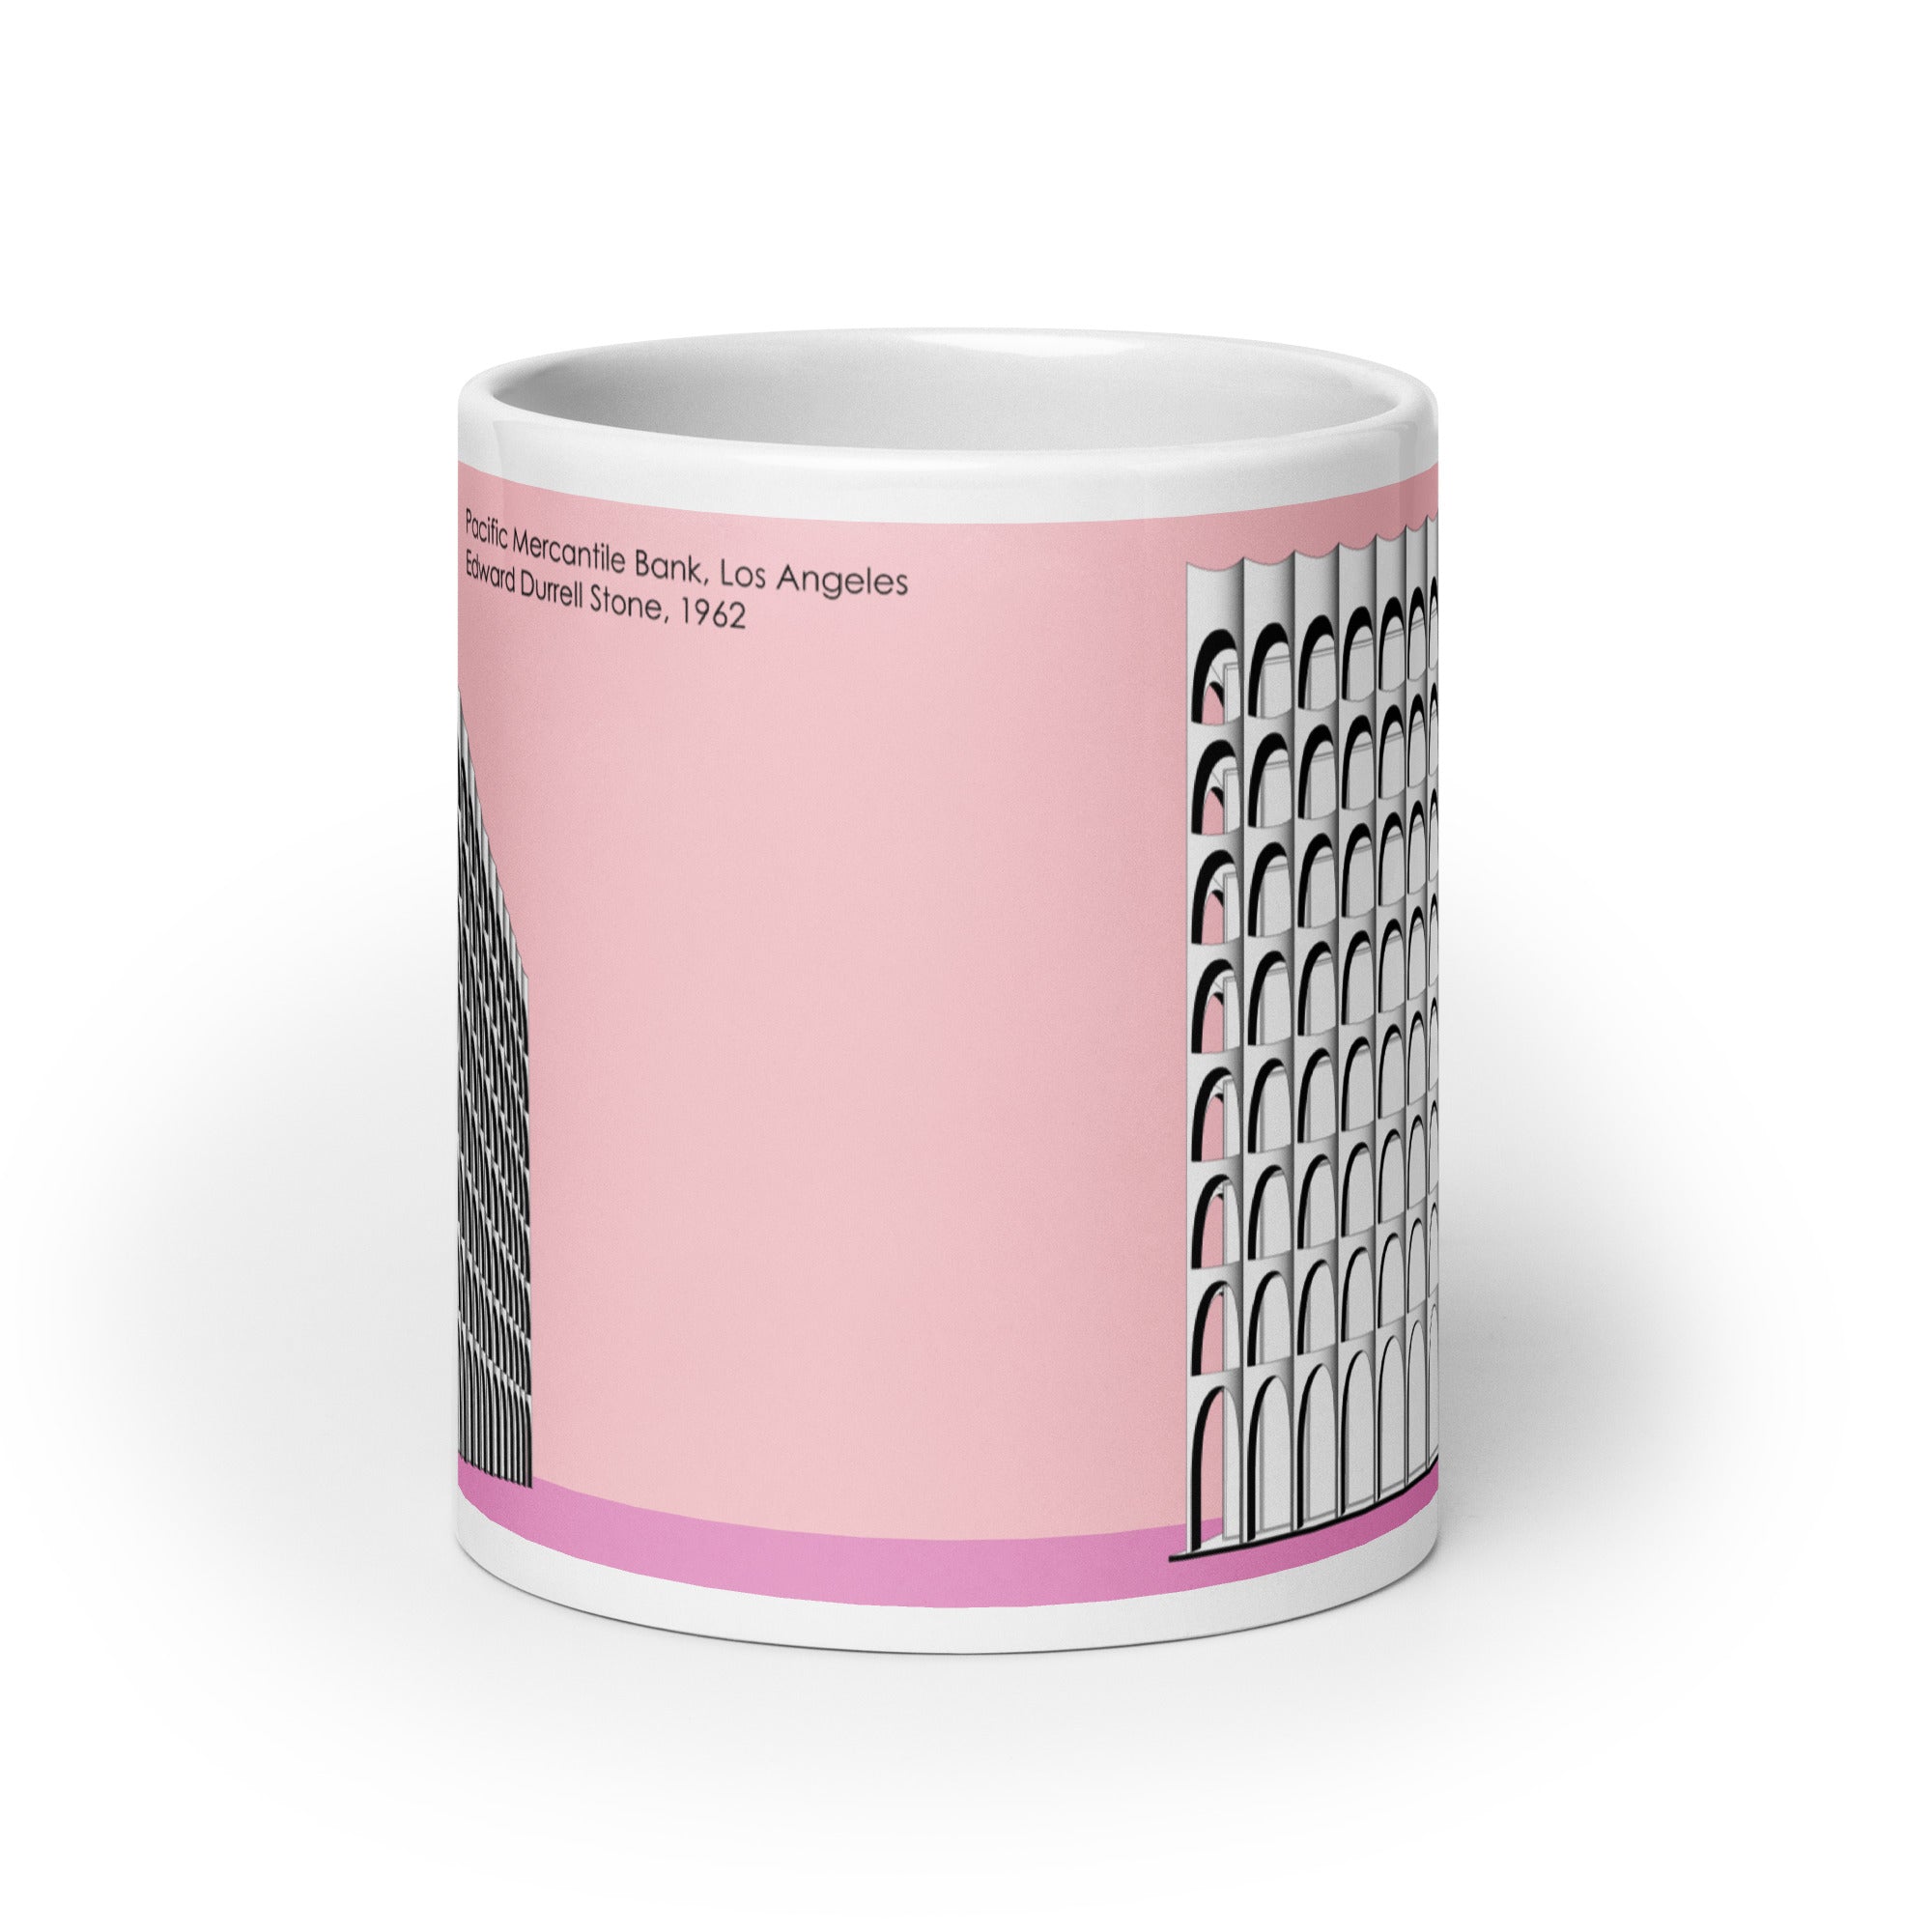 Pacific Mercantile Bank Pink Mugs